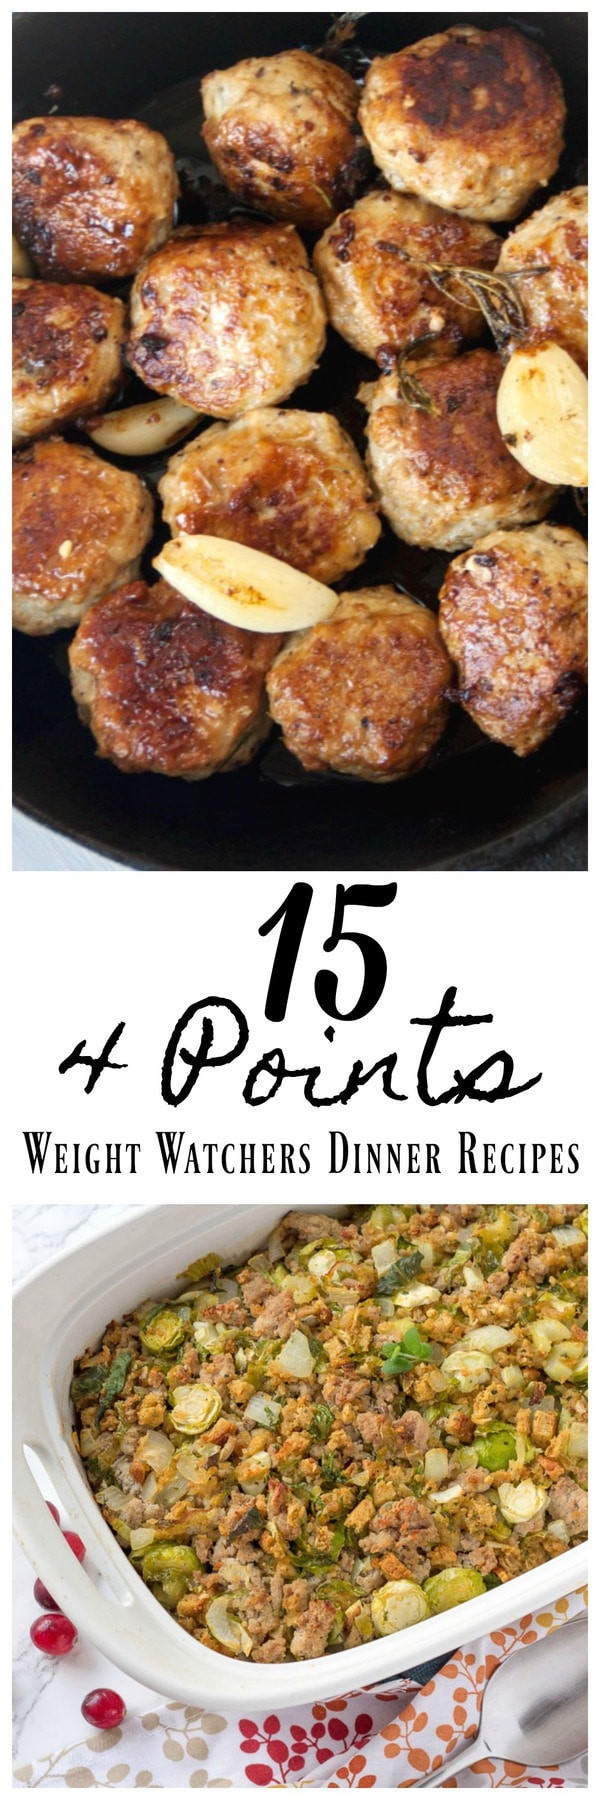 Weight Watchers Recipe Dinner
 15 4 Point Weight Watchers Dinner Recipes • Mid Momma